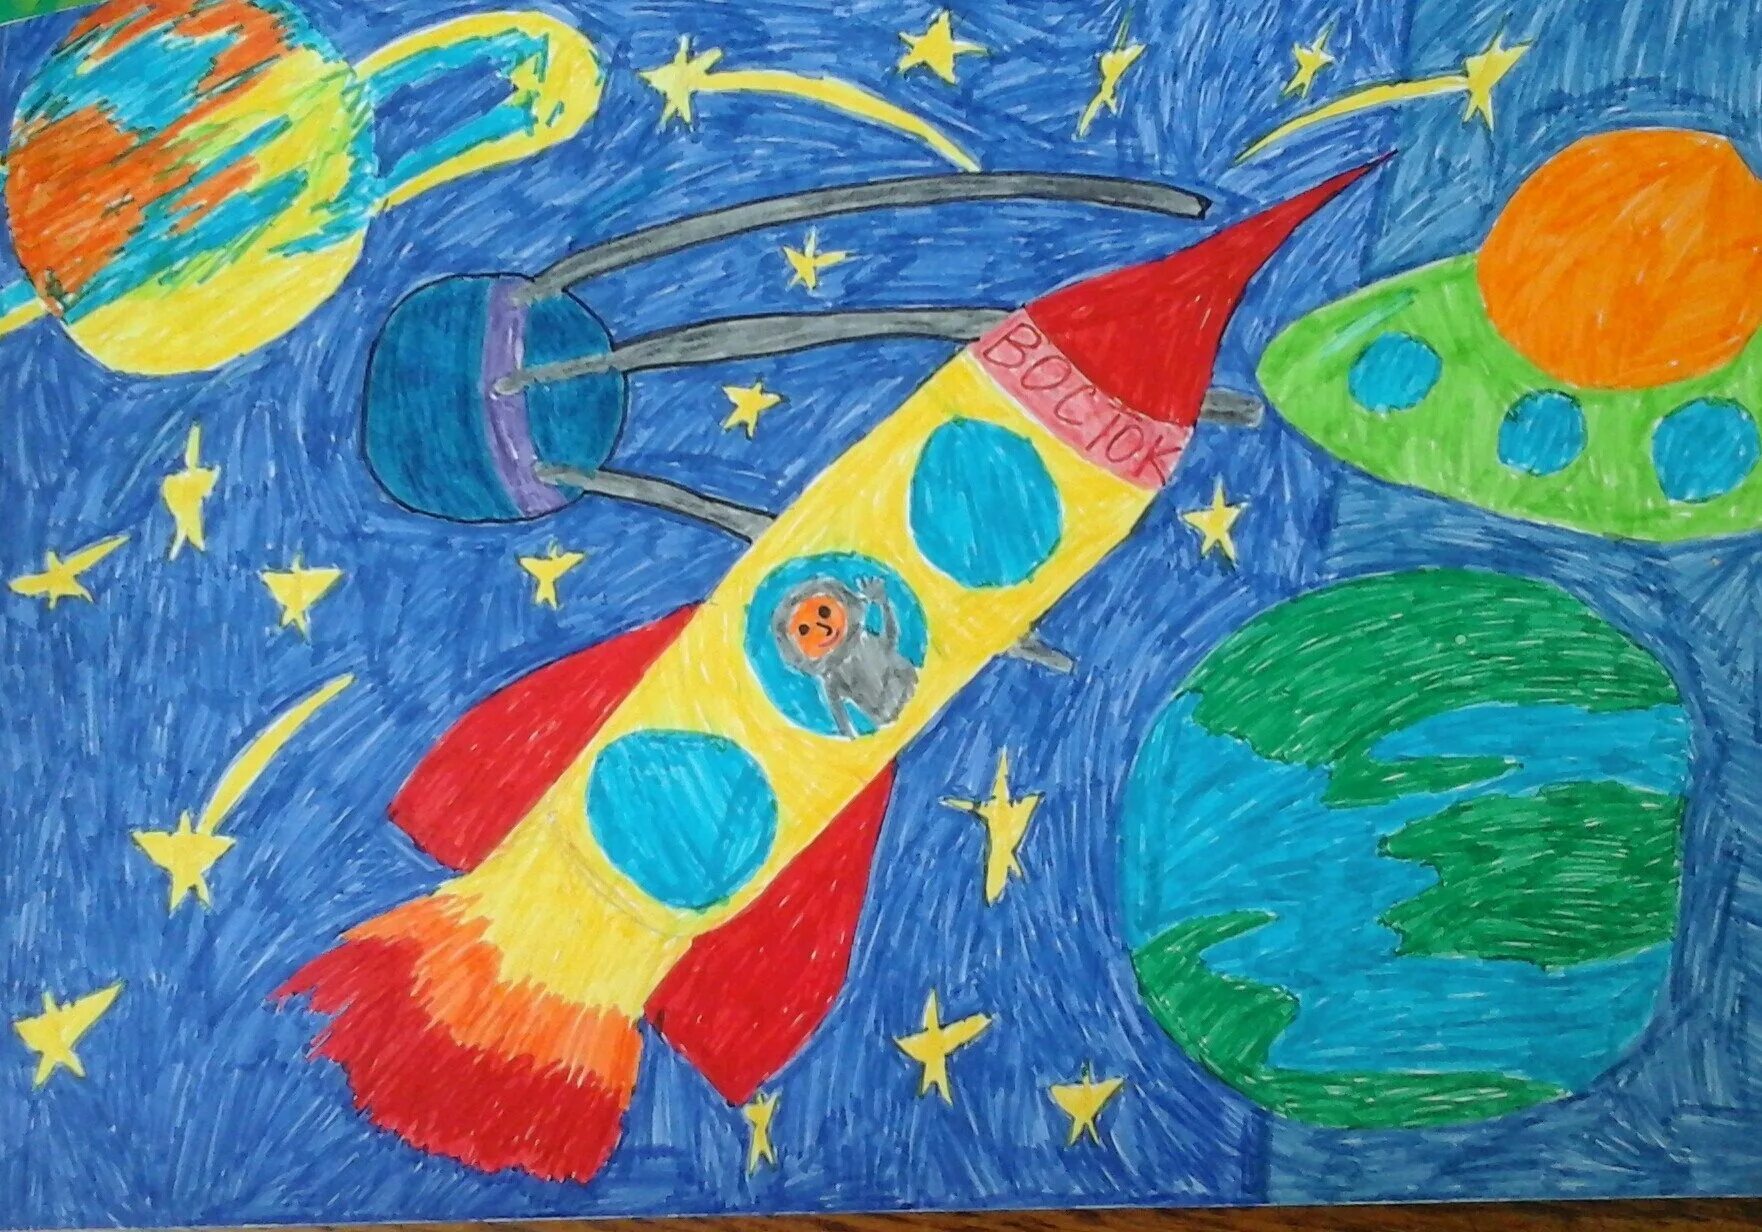 Конкурс рисунков на тему космос. Рисунок на тему космос. Рисунок на космическую тему. Космос рисование с детьми детский сад. Детские рисунки на тему космос.